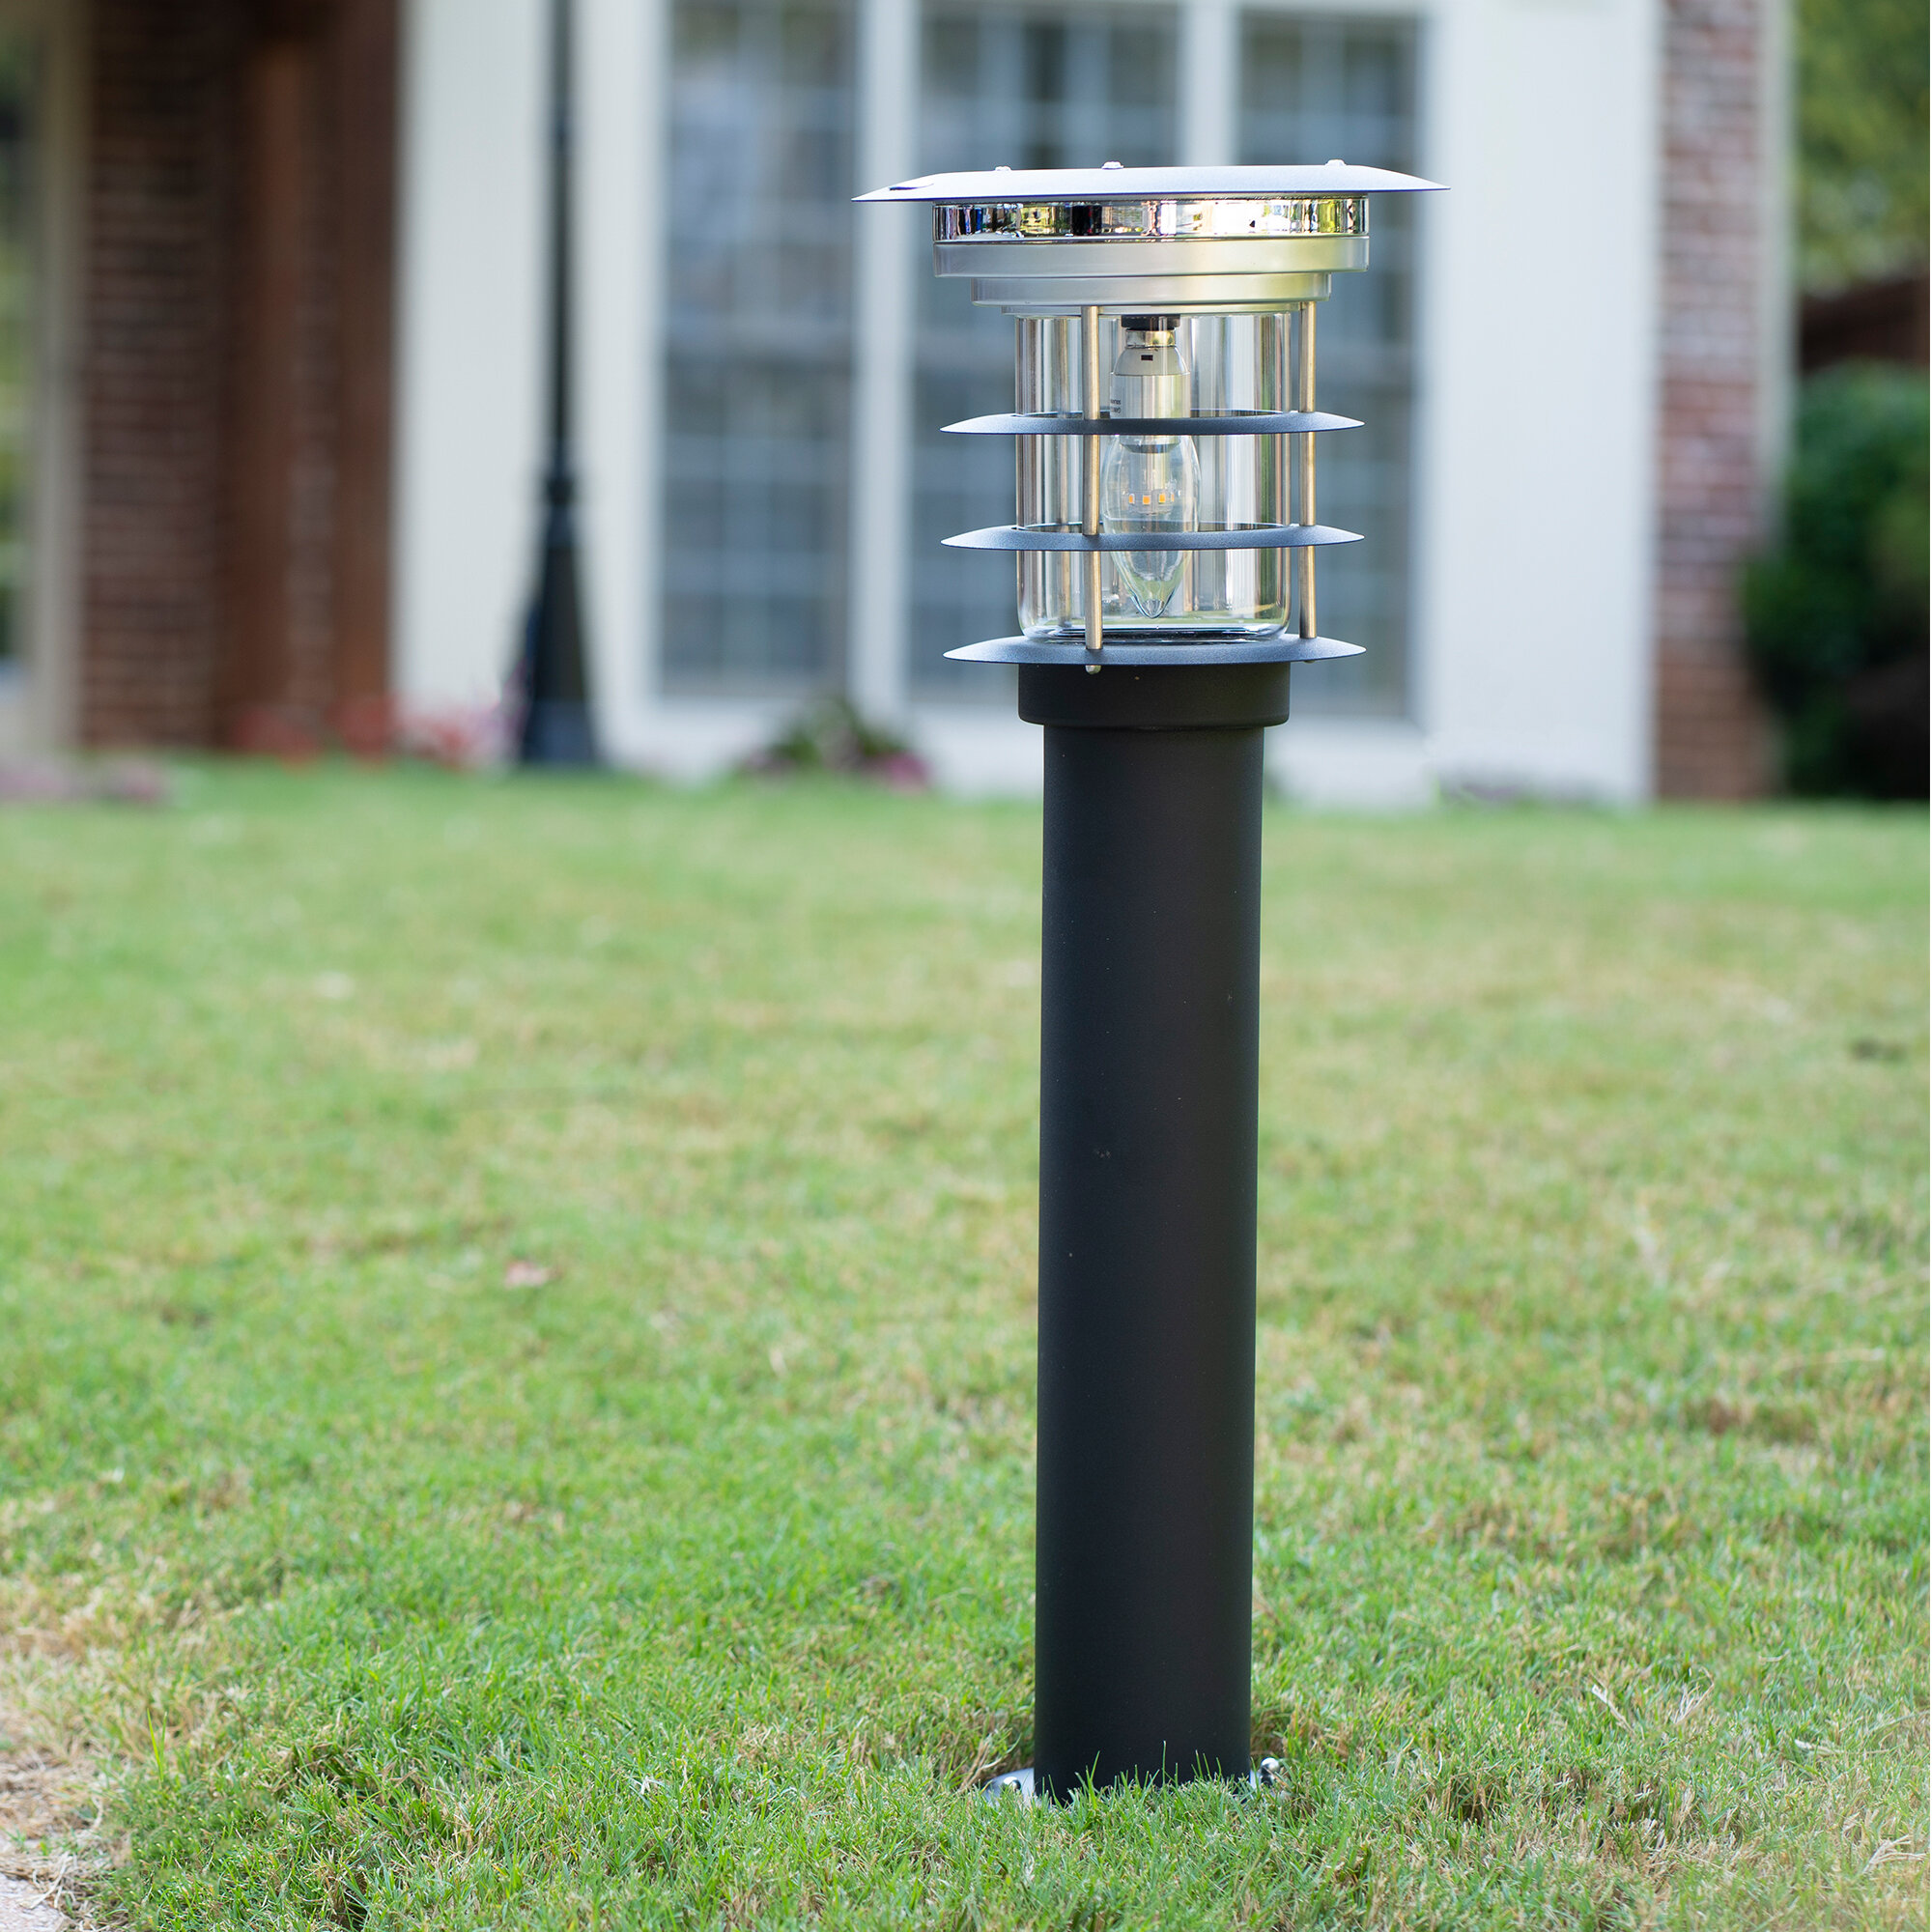 Solar Power 7 LED Spotlight Landscape Lights Outdoor Garden Pathway Lawn Lamp 